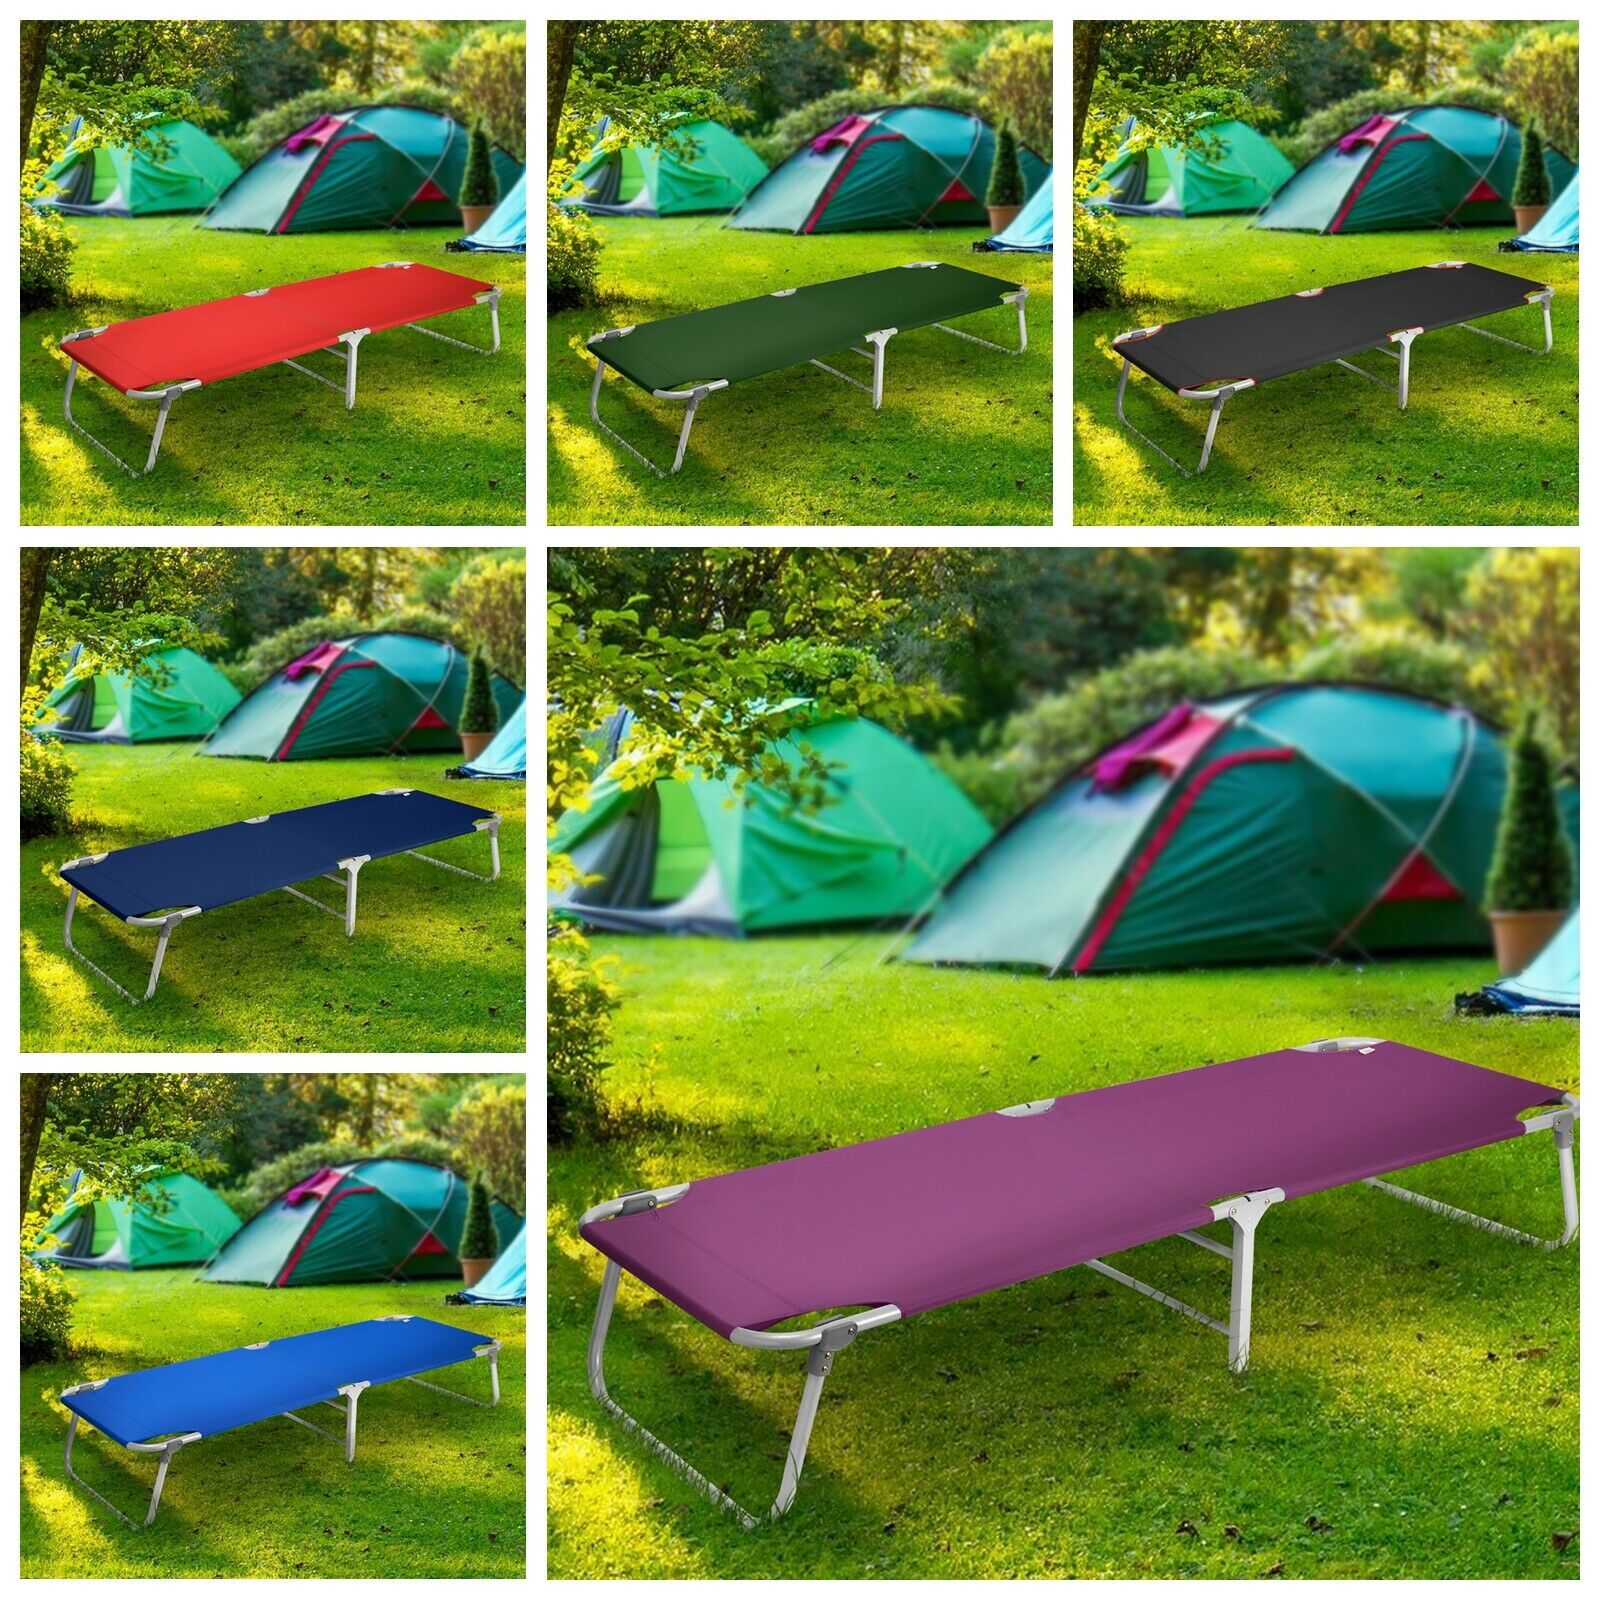 Camping Patio Portable Sleeping Folding Bed Cots Beach Pool Travel Sun+ Free Bag